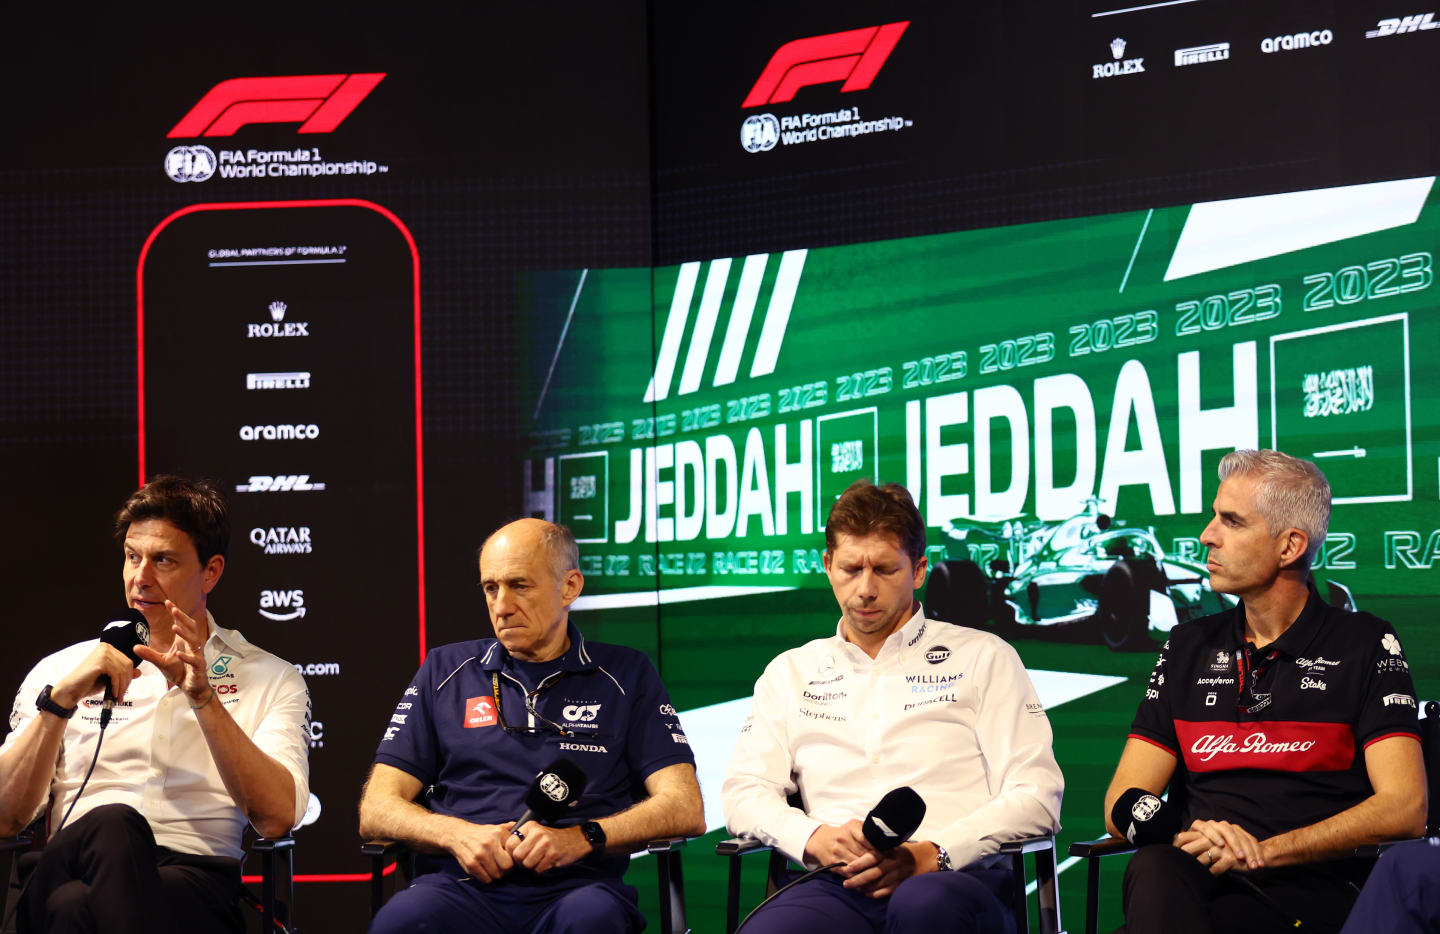 JEDDAH, SAUDI ARABIA - MARCH 17: (L-R) Mercedes GP Executive Director Toto Wolff, Scuderia